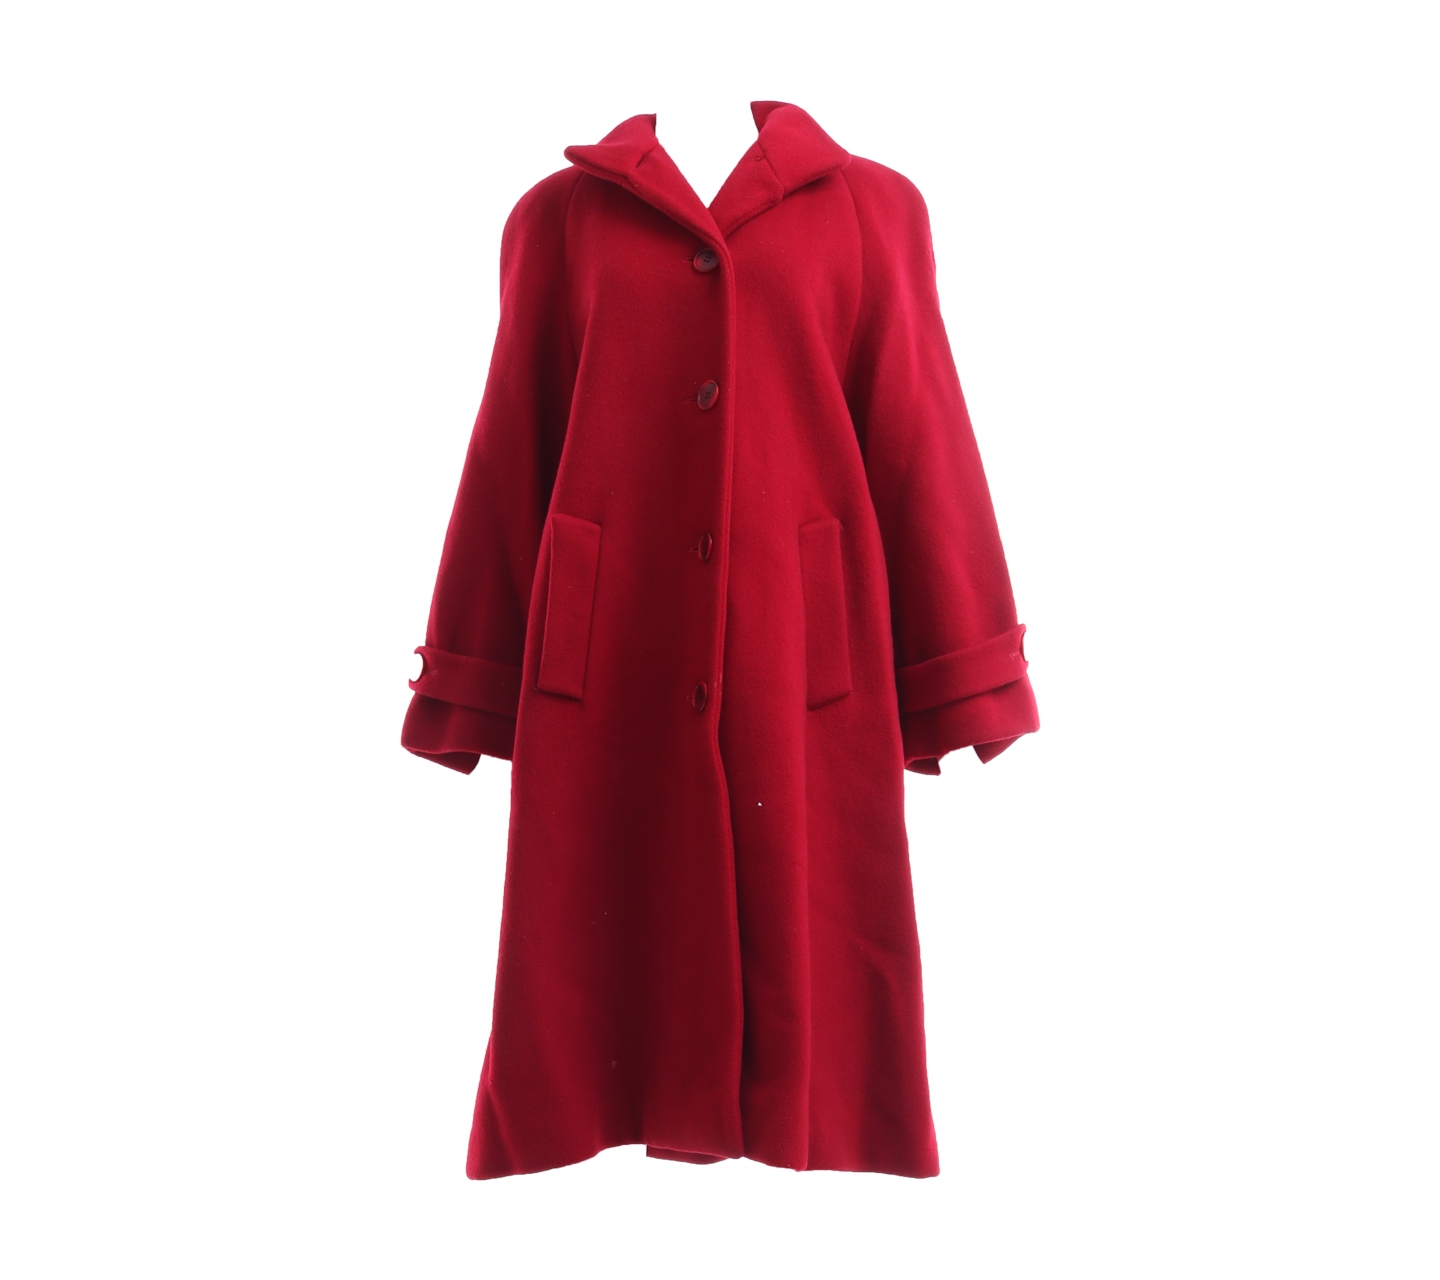 Perry Ellis Red Coat